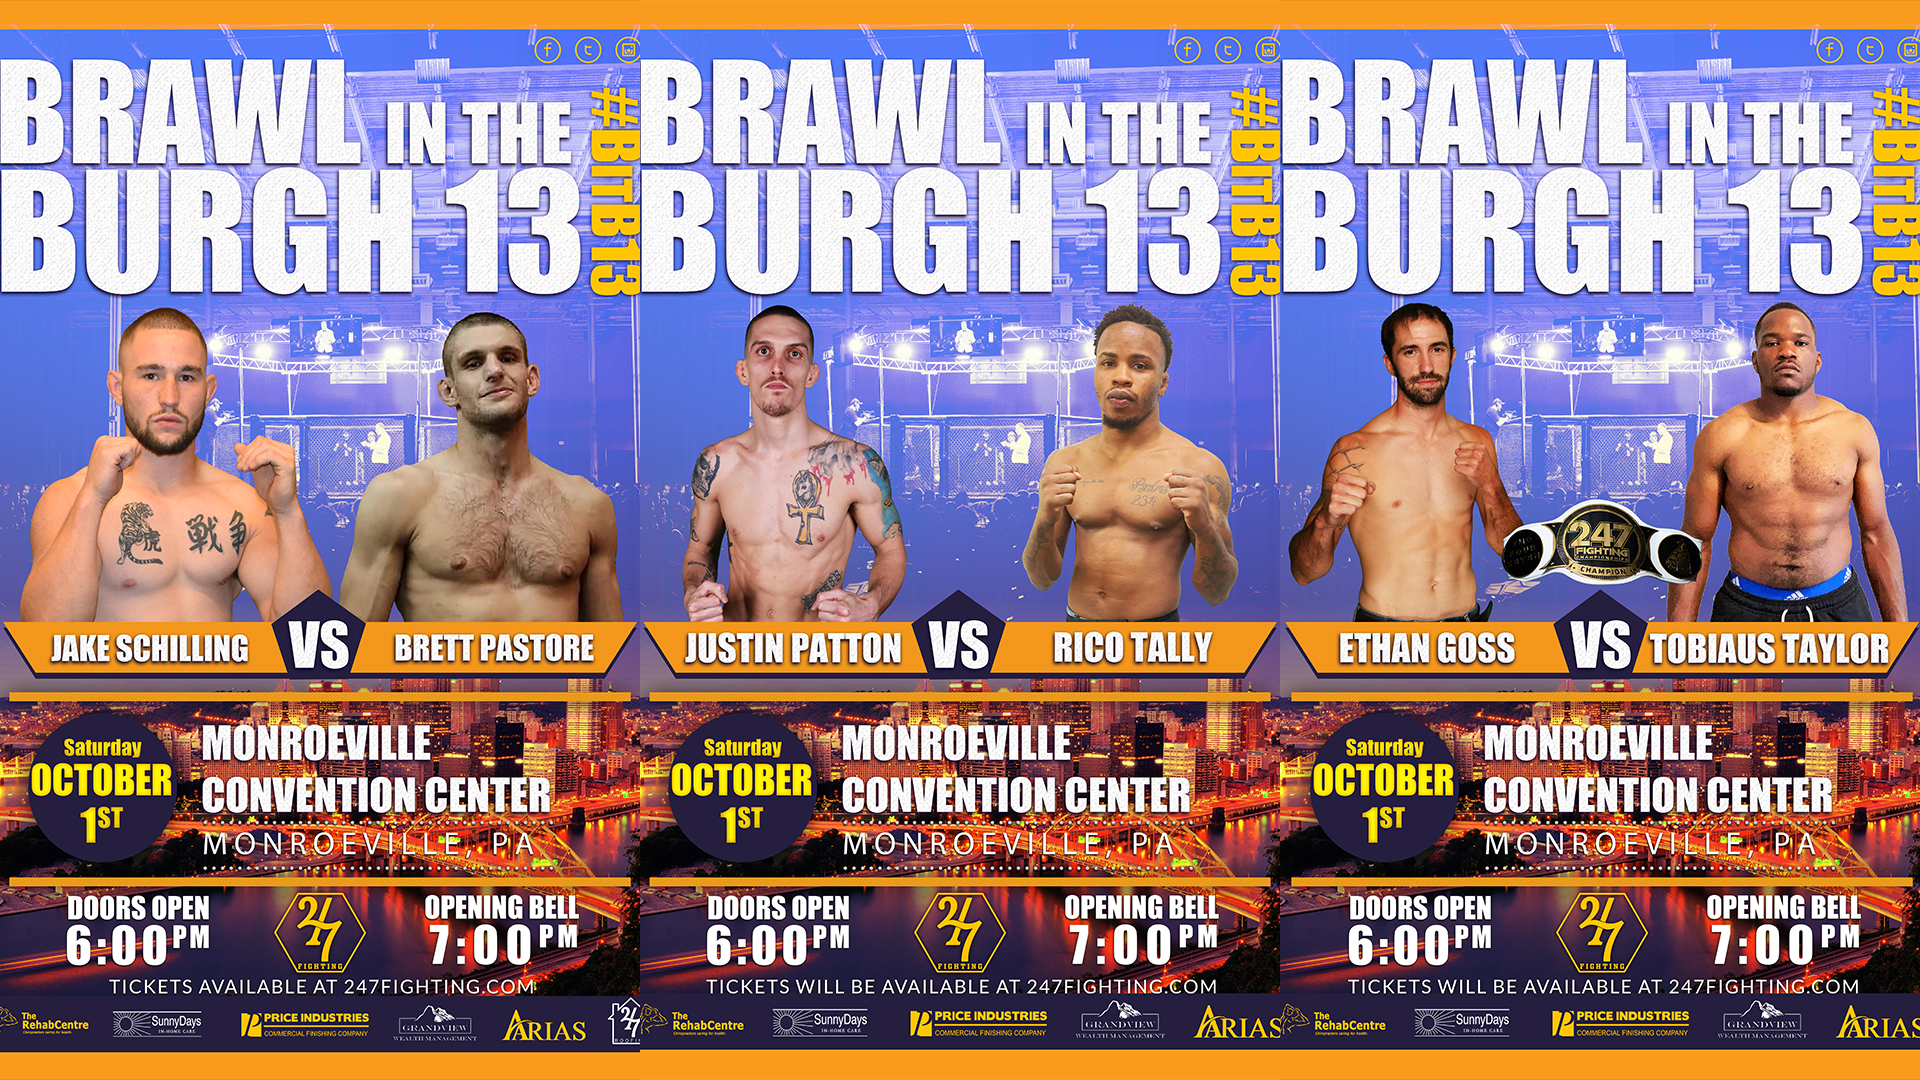 bitb-13-pro-fights-brawl-burgh-13-247-fighting-championships